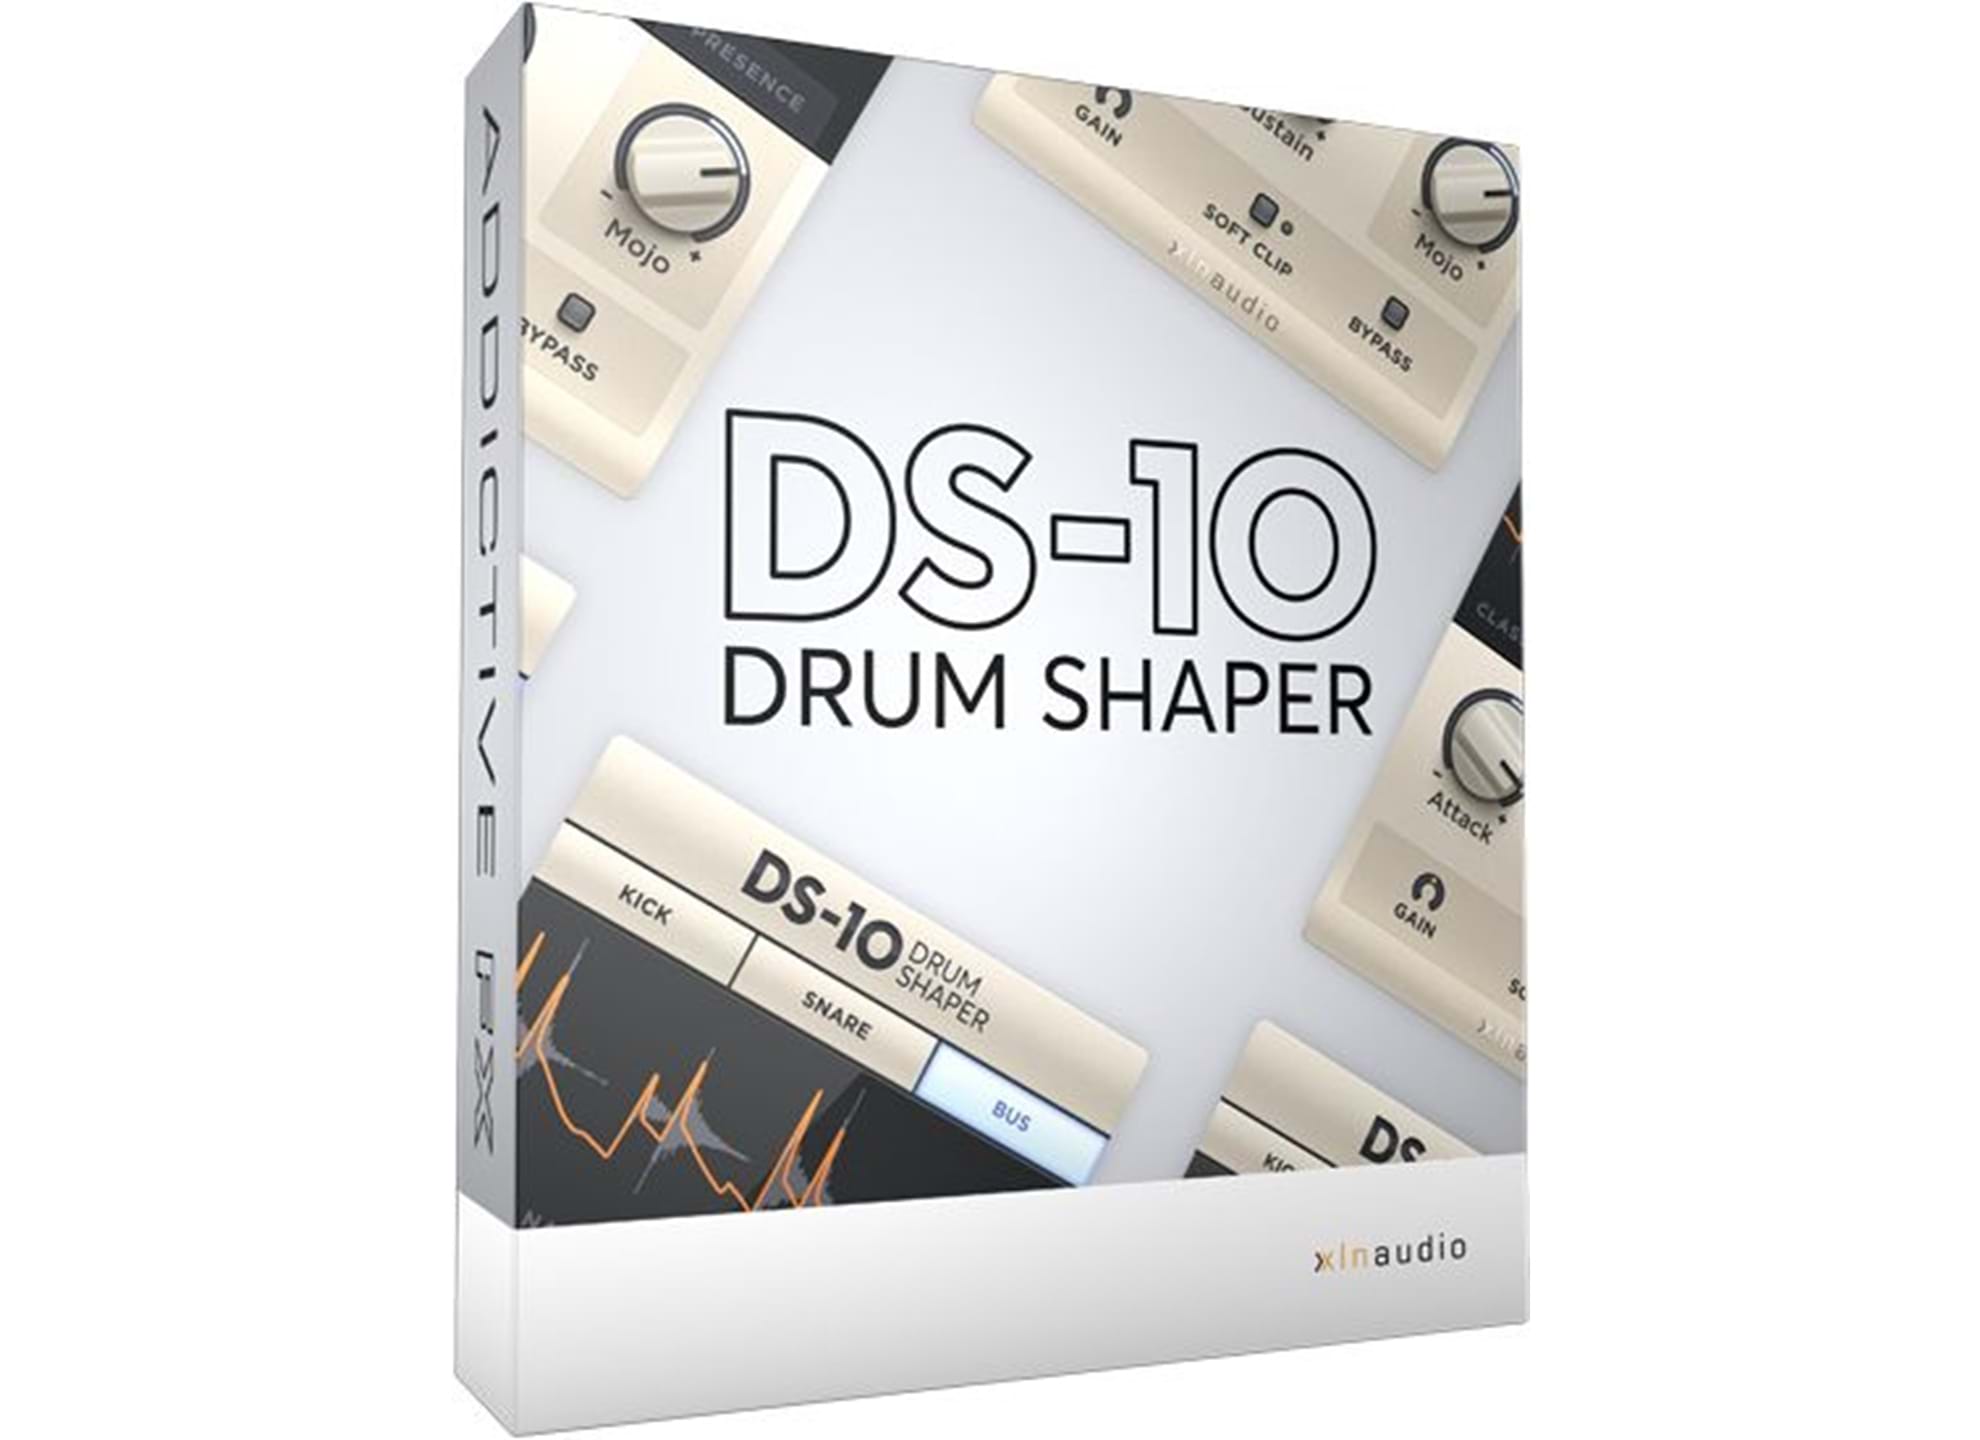 DS-10 Drum Shaper